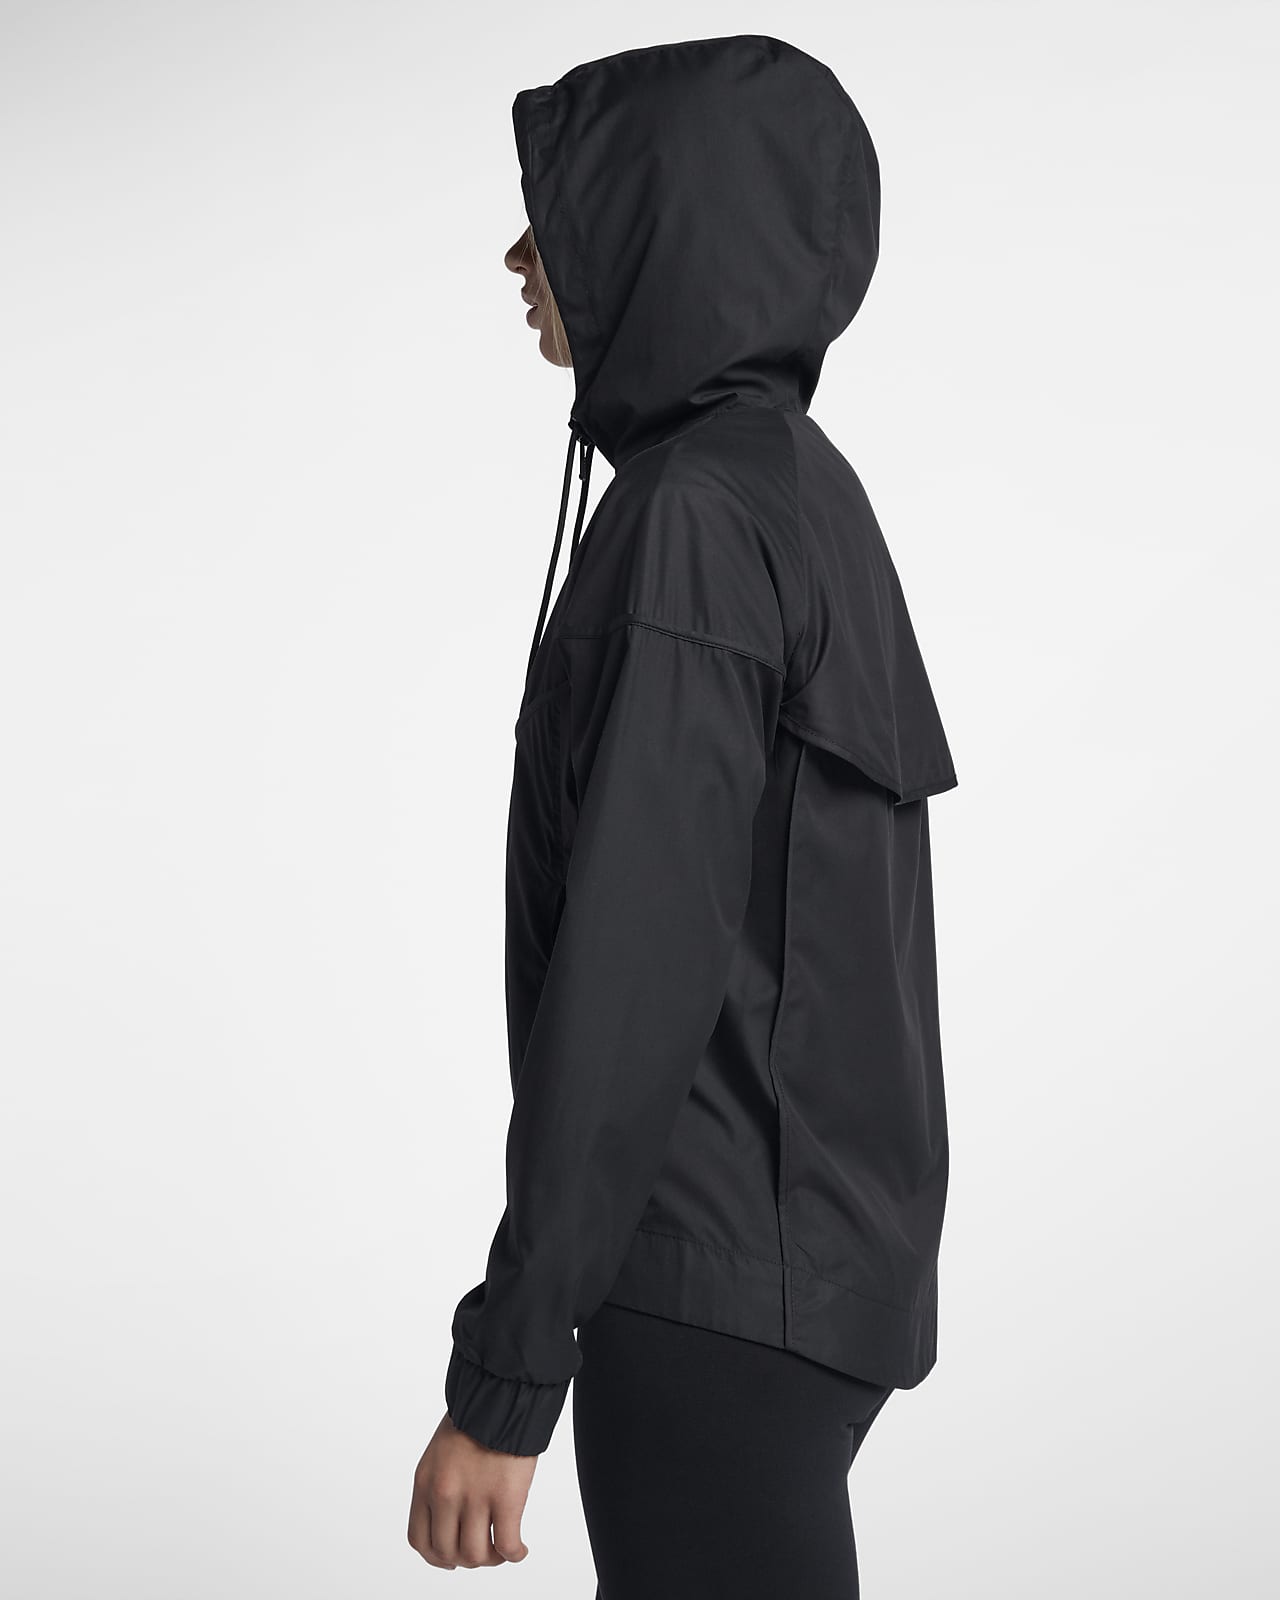 Nike Sportswear Womens Windrunner Jacket Black/Black/White CN6910-010 :  : Clothing, Shoes & Accessories